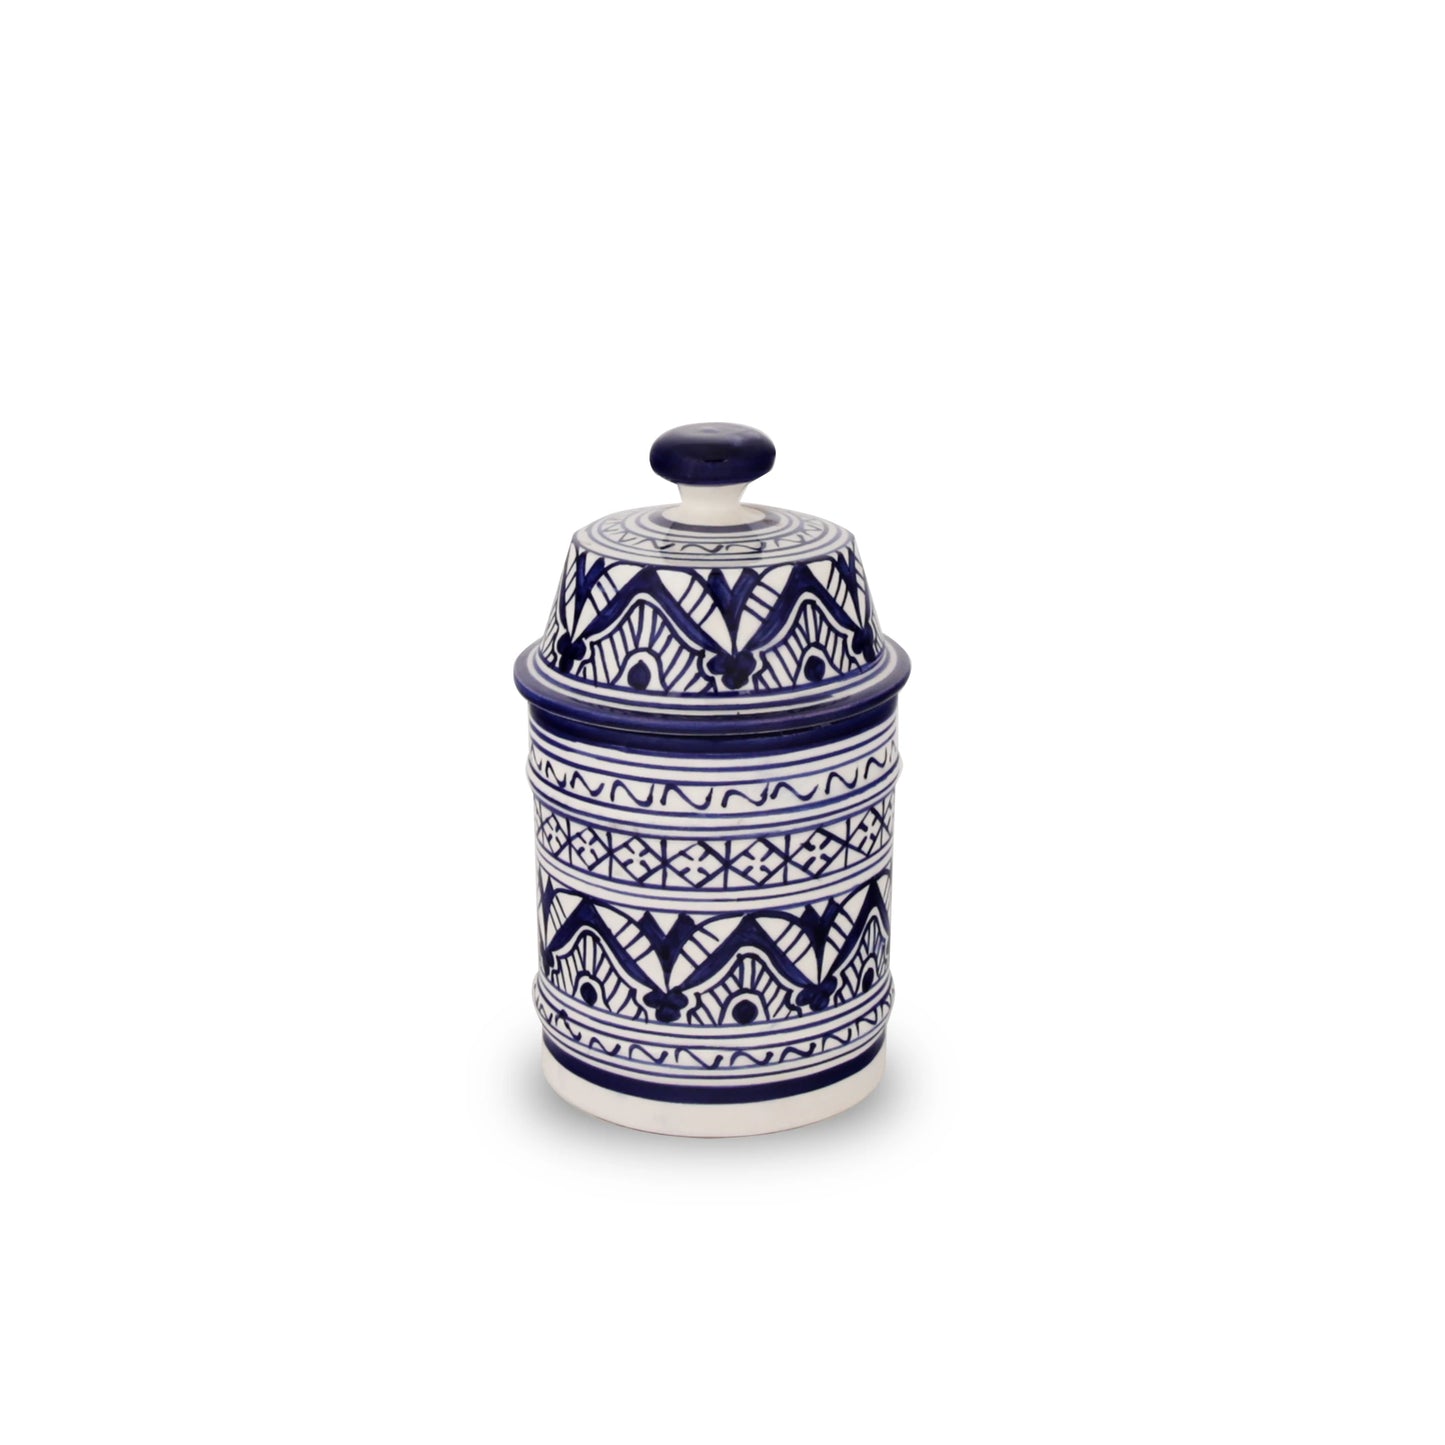 Handmade Moroccan Ceramic Sugar Jar / Canister